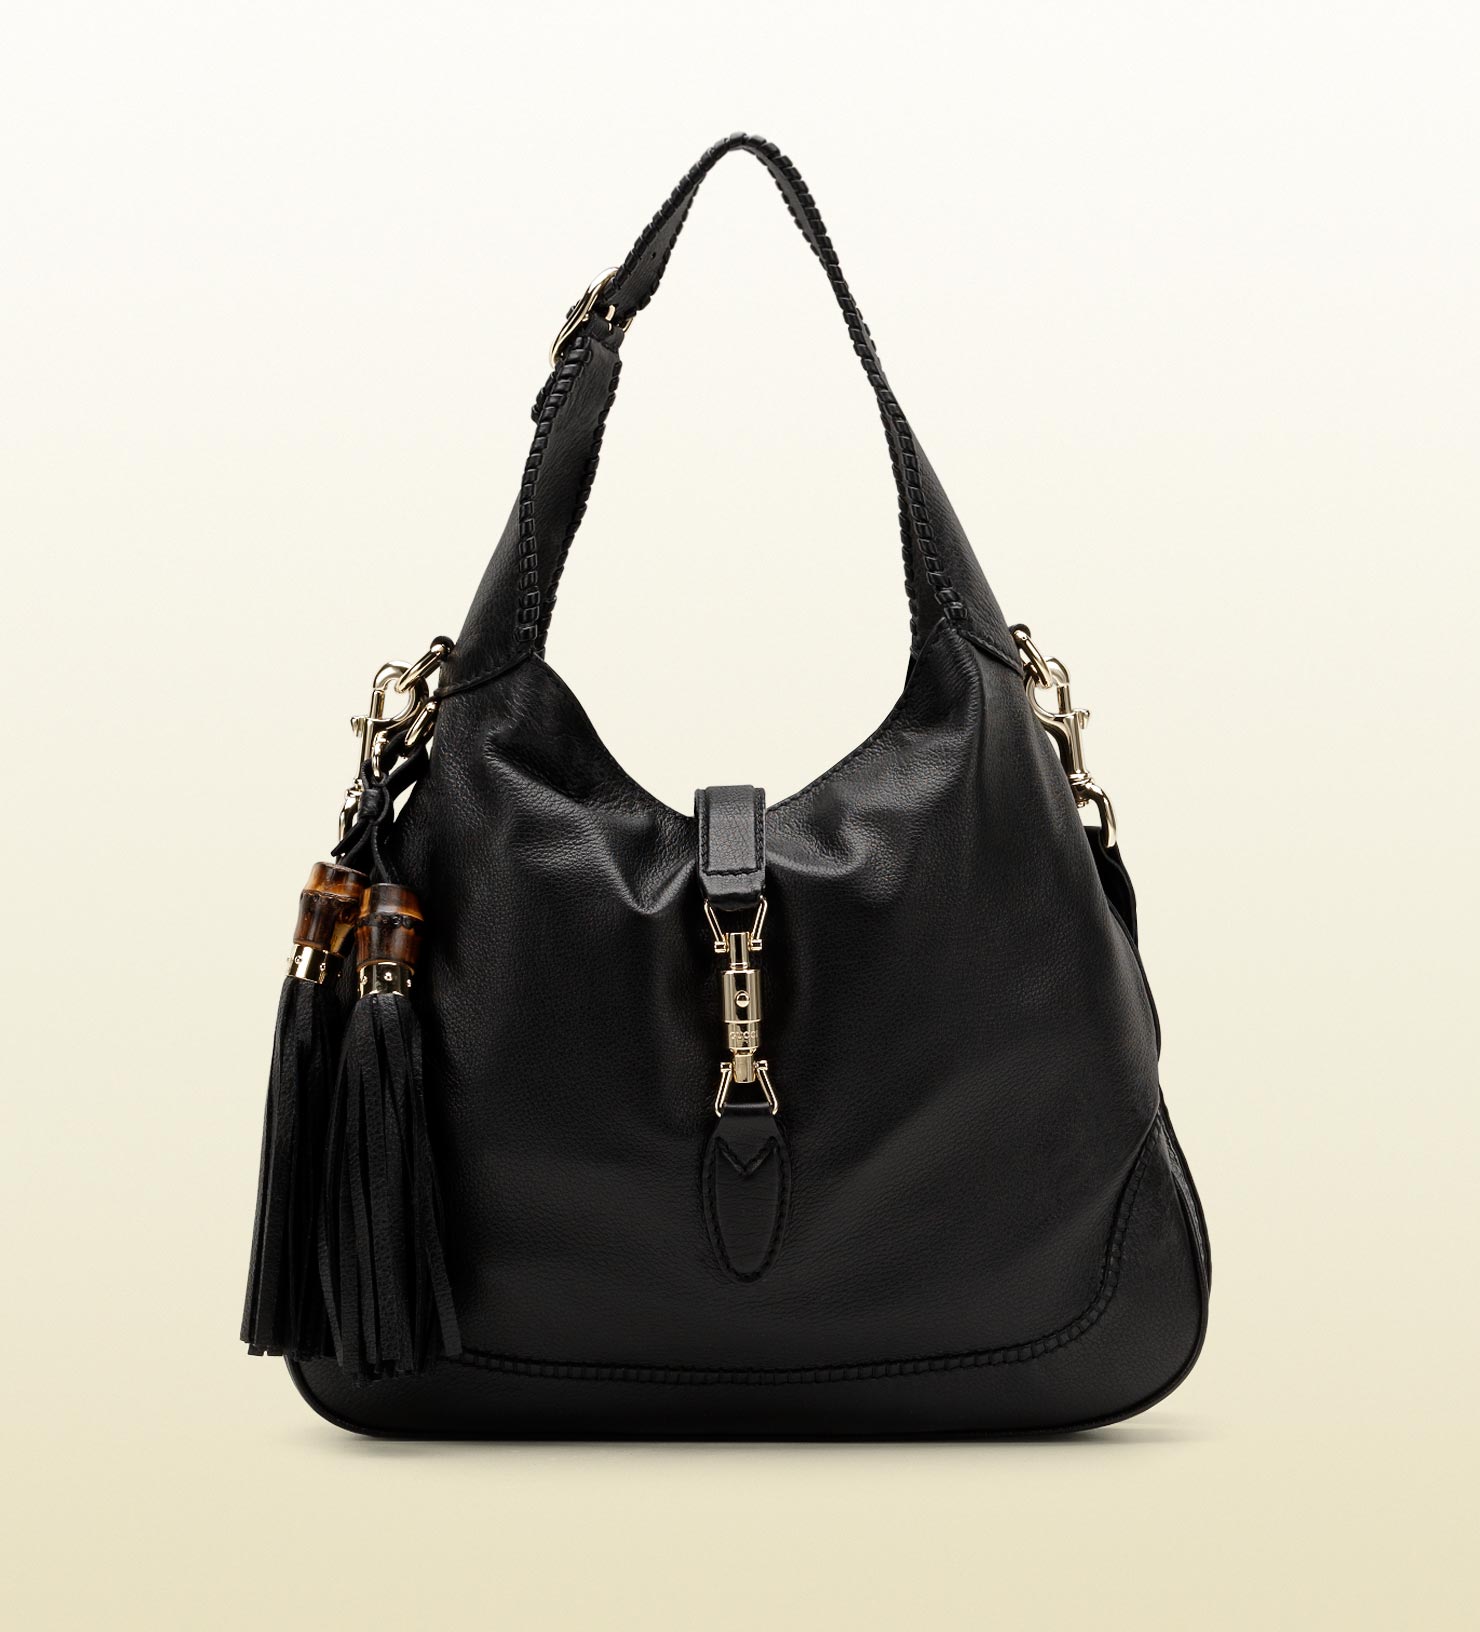 Gucci New Jackie Leather Shoulder Bag in Black | Lyst